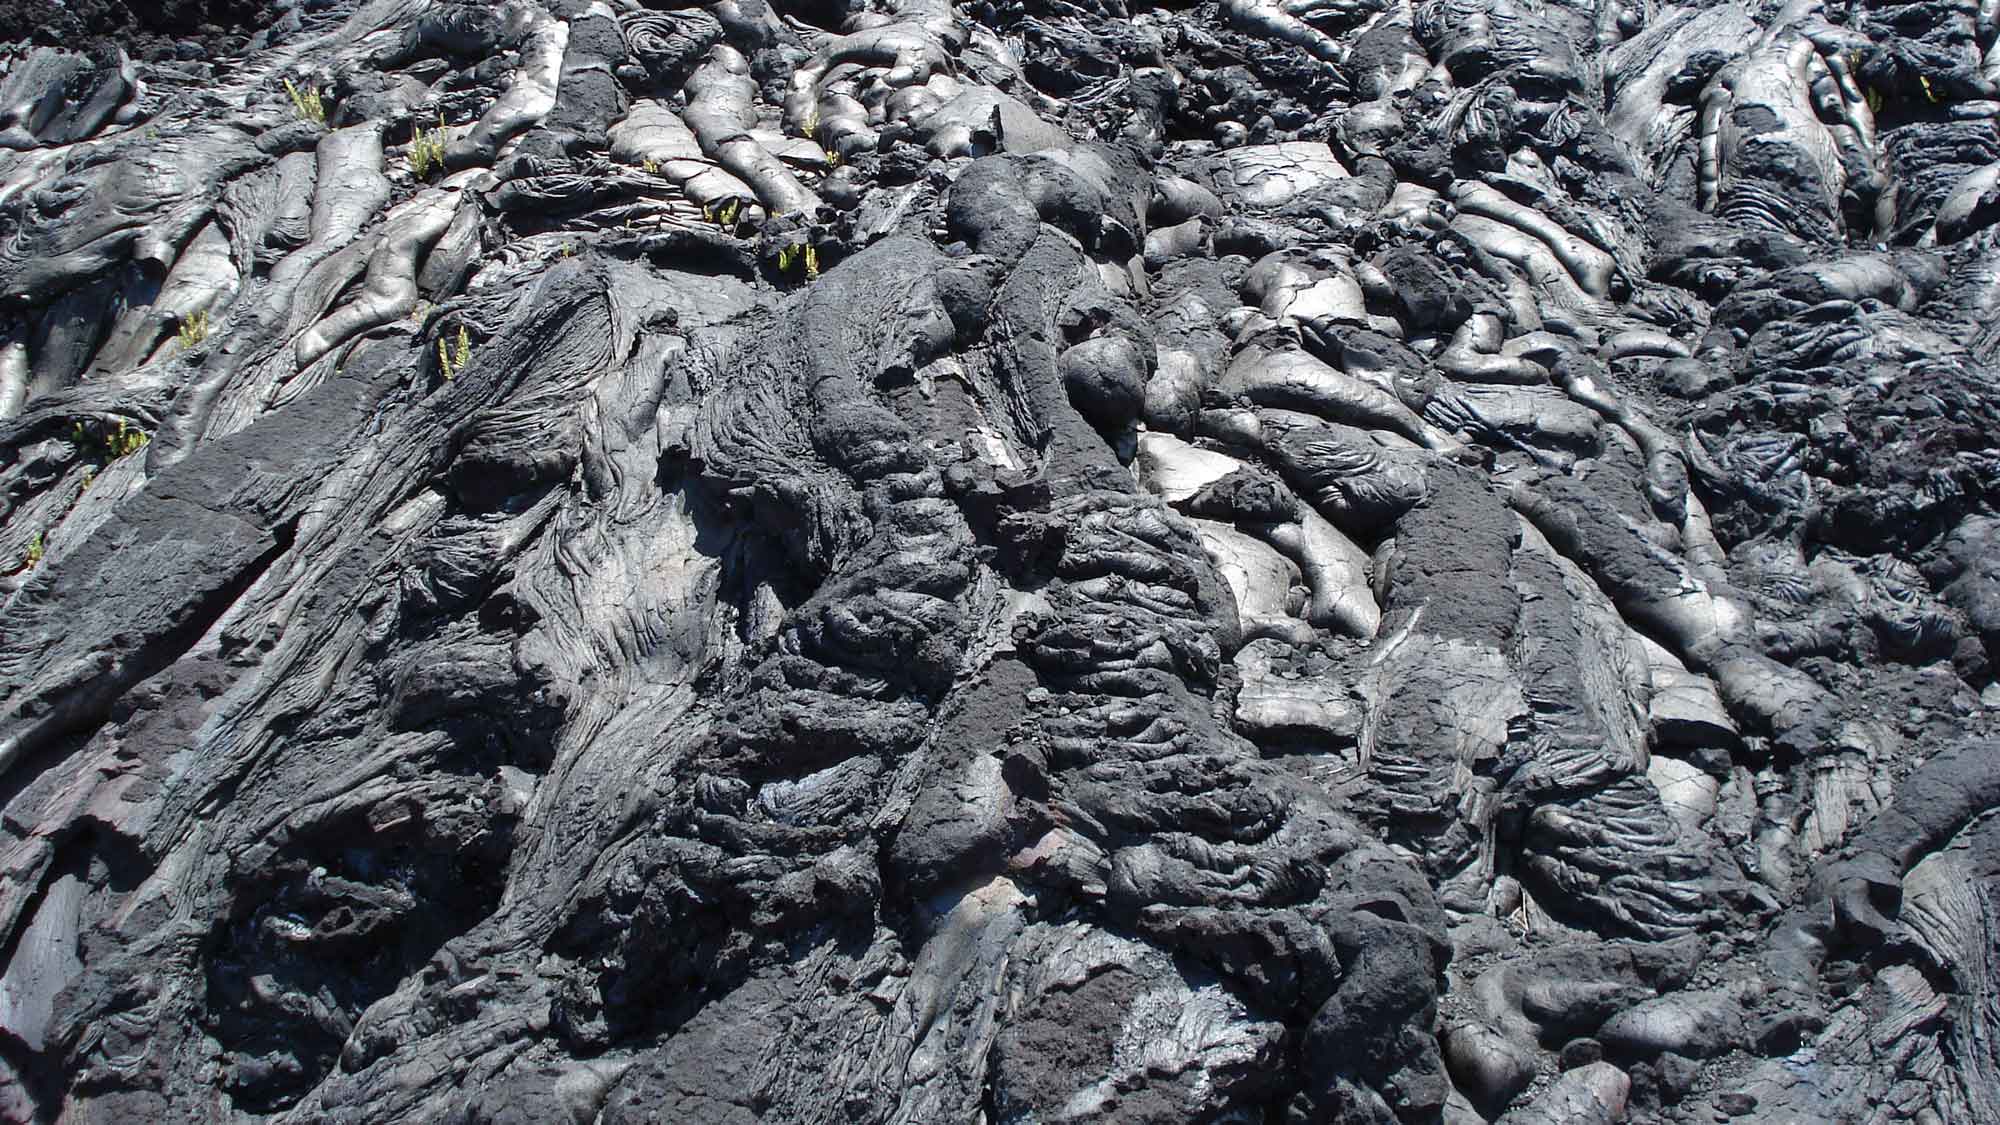 Photograph of recently erupted basalt lava on the Big Island of Hawaii.